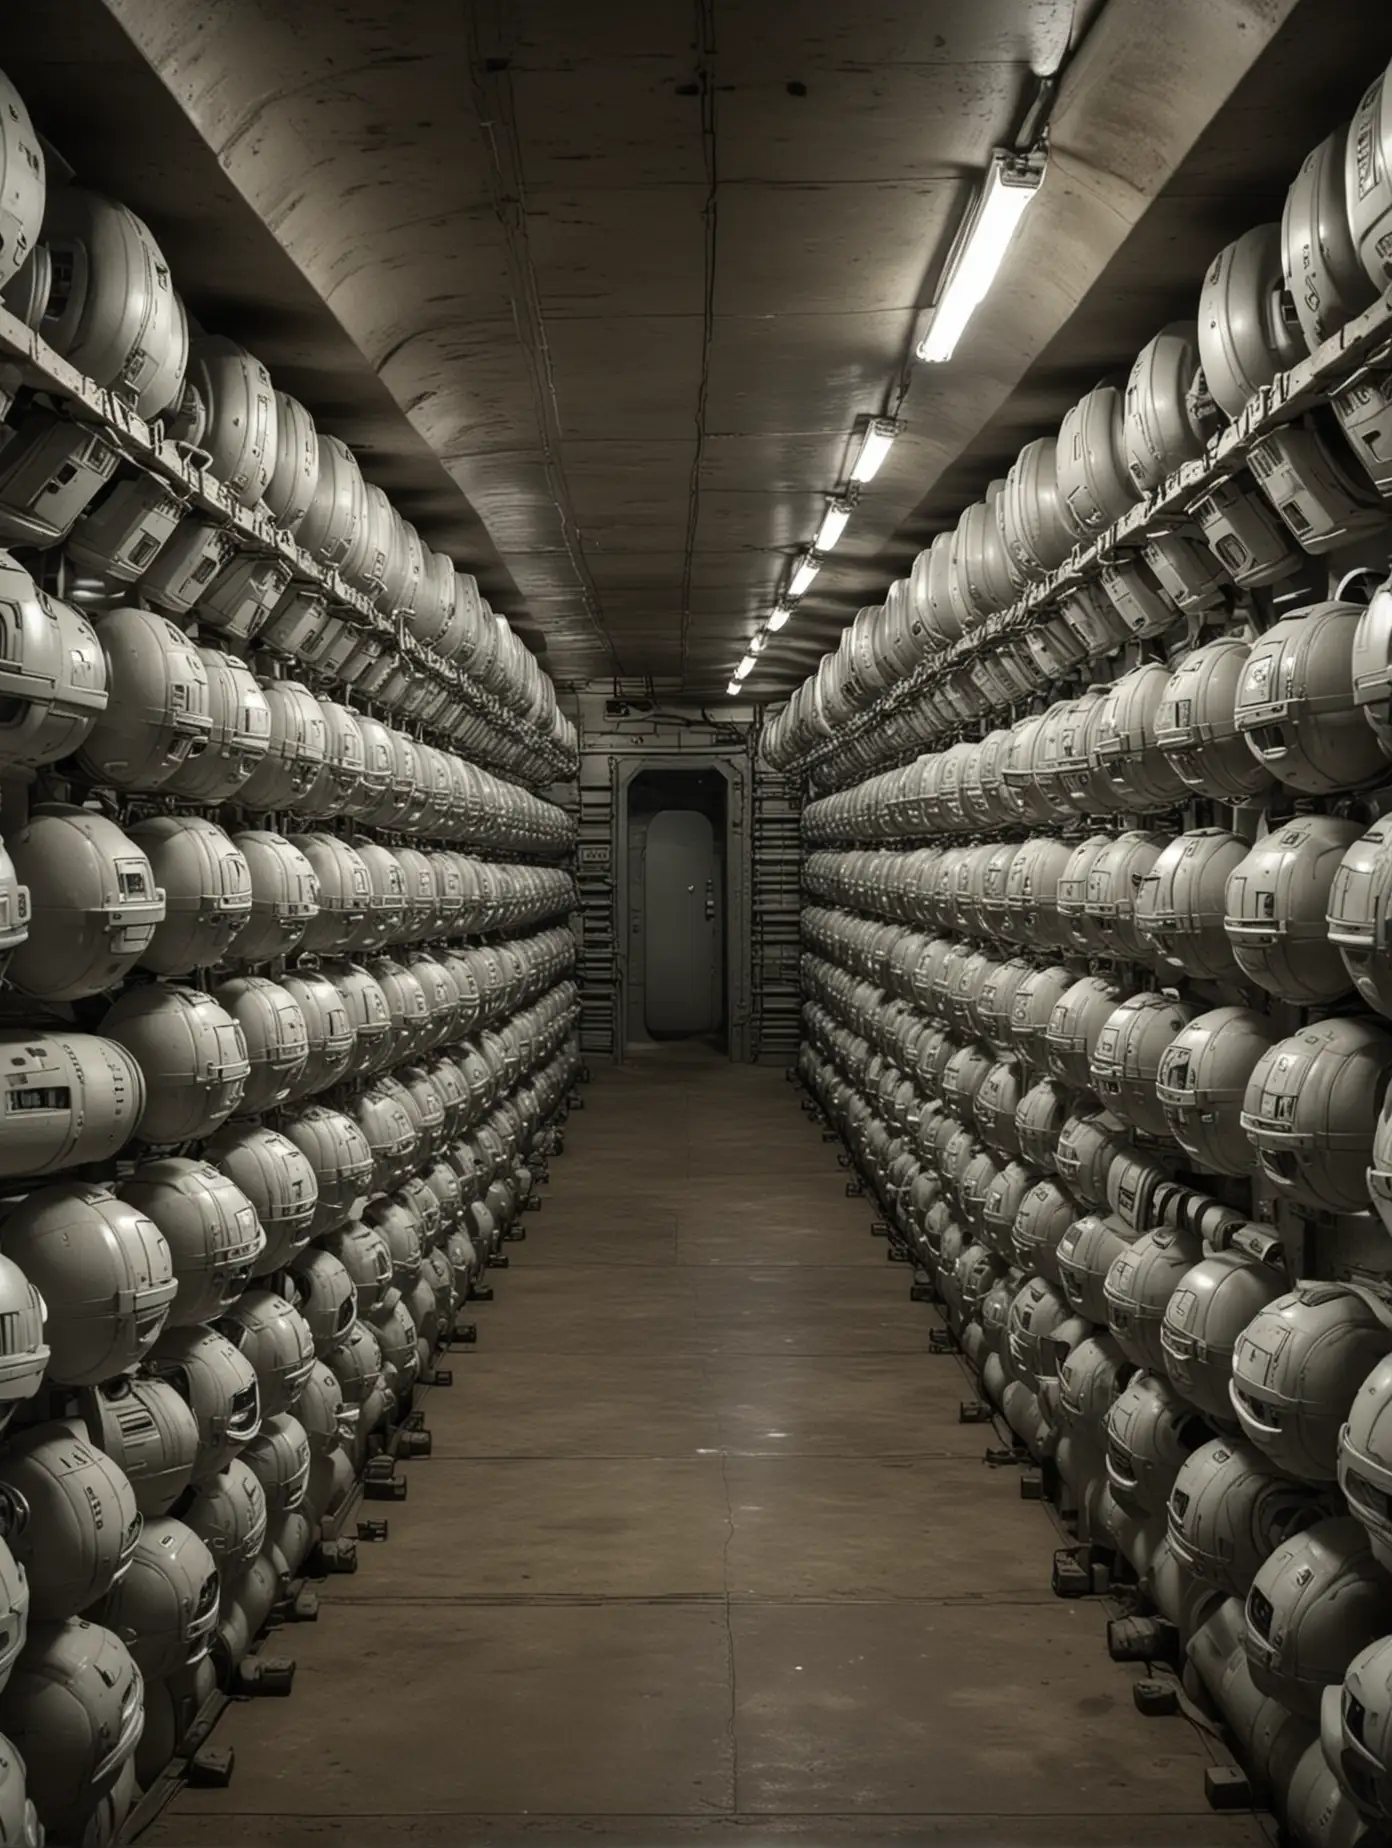 lot of hypersleep capsules, like in alien movie,  in an underground bunker, symmetrically placed
